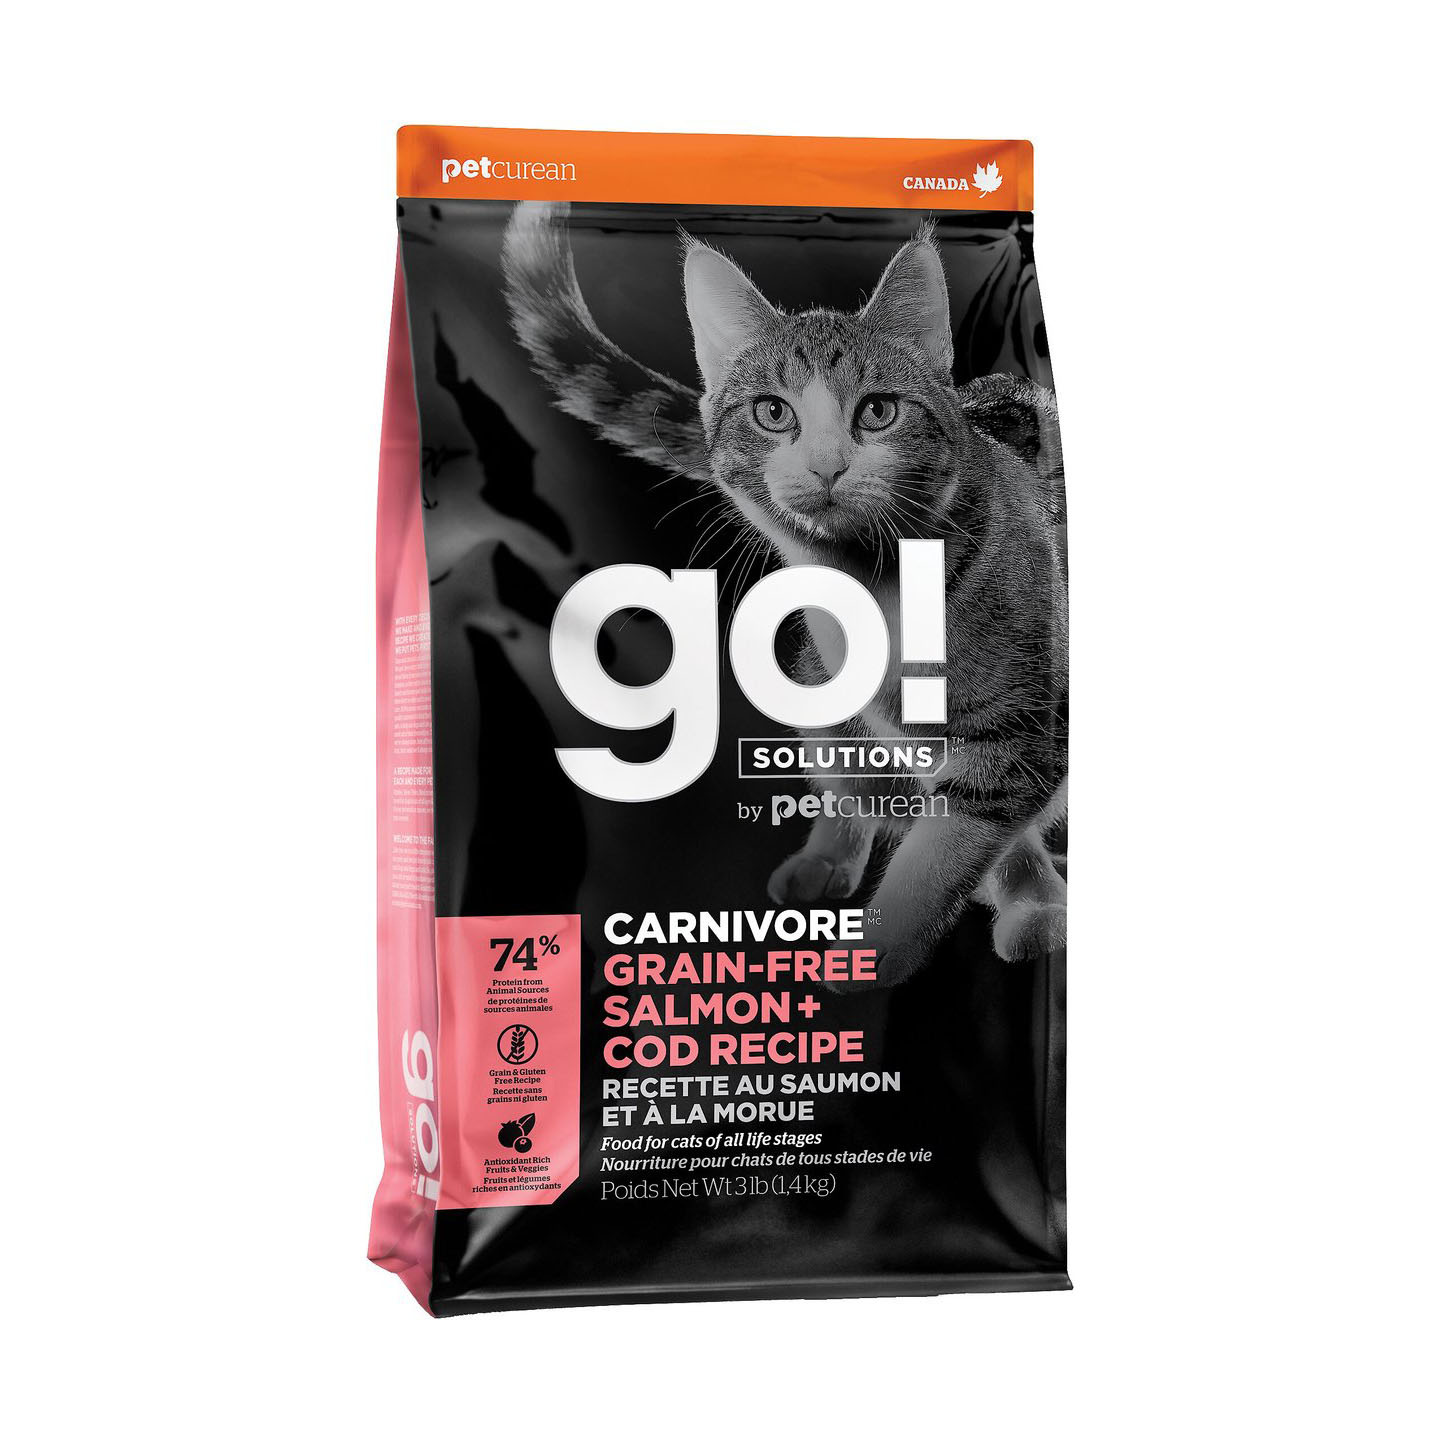 Go! Cat Dry - Pawtrero Mississippi